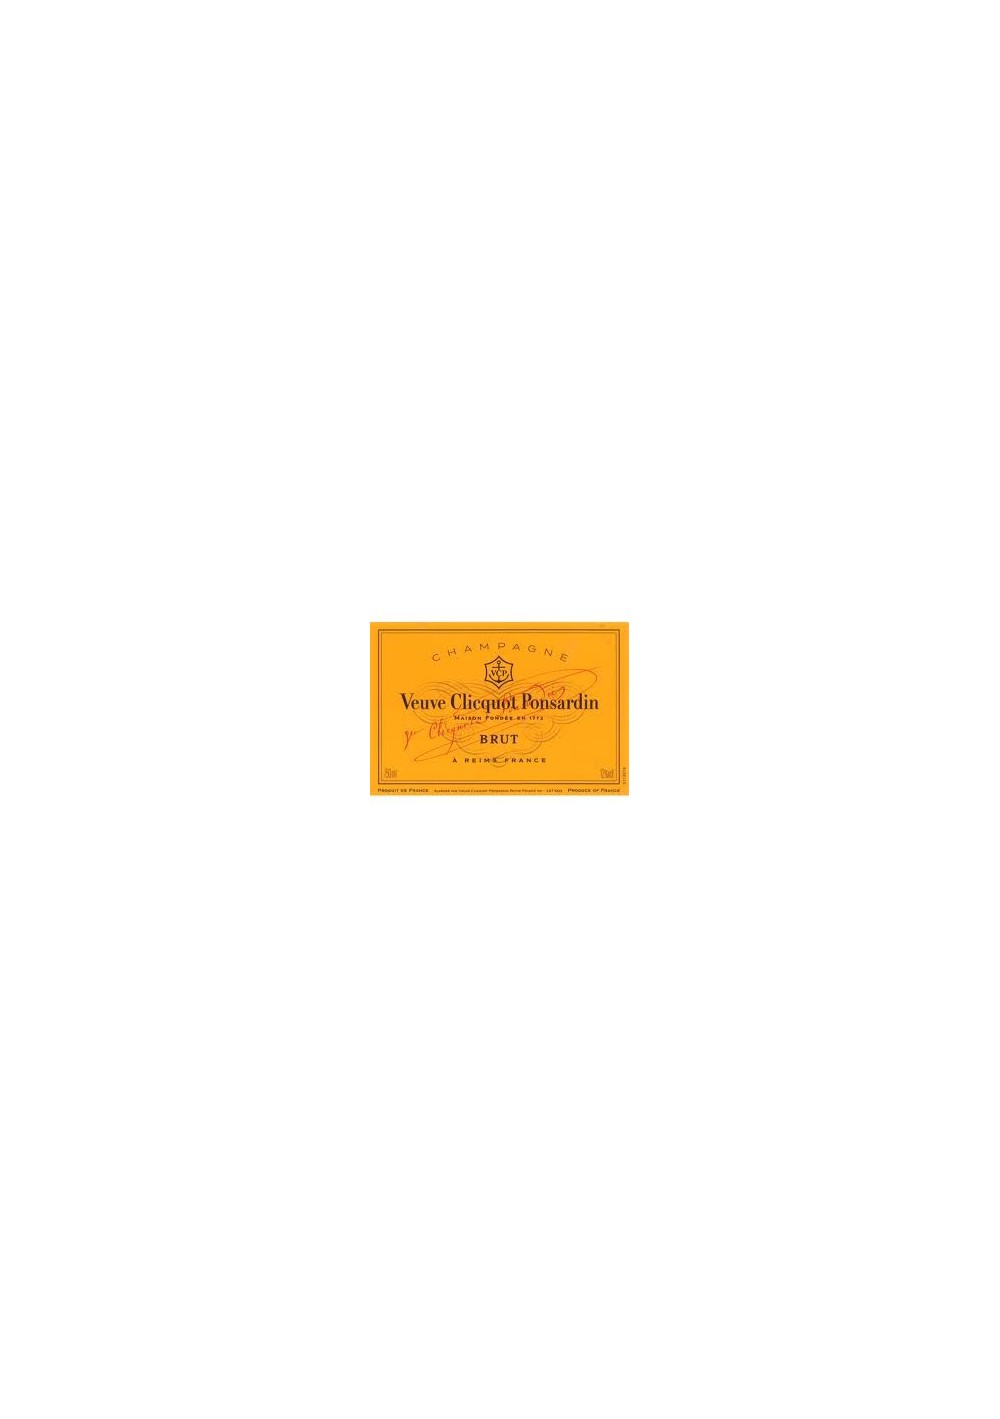 Veuve Clicquot Carte Jaune 6 liters - Mathusalem 